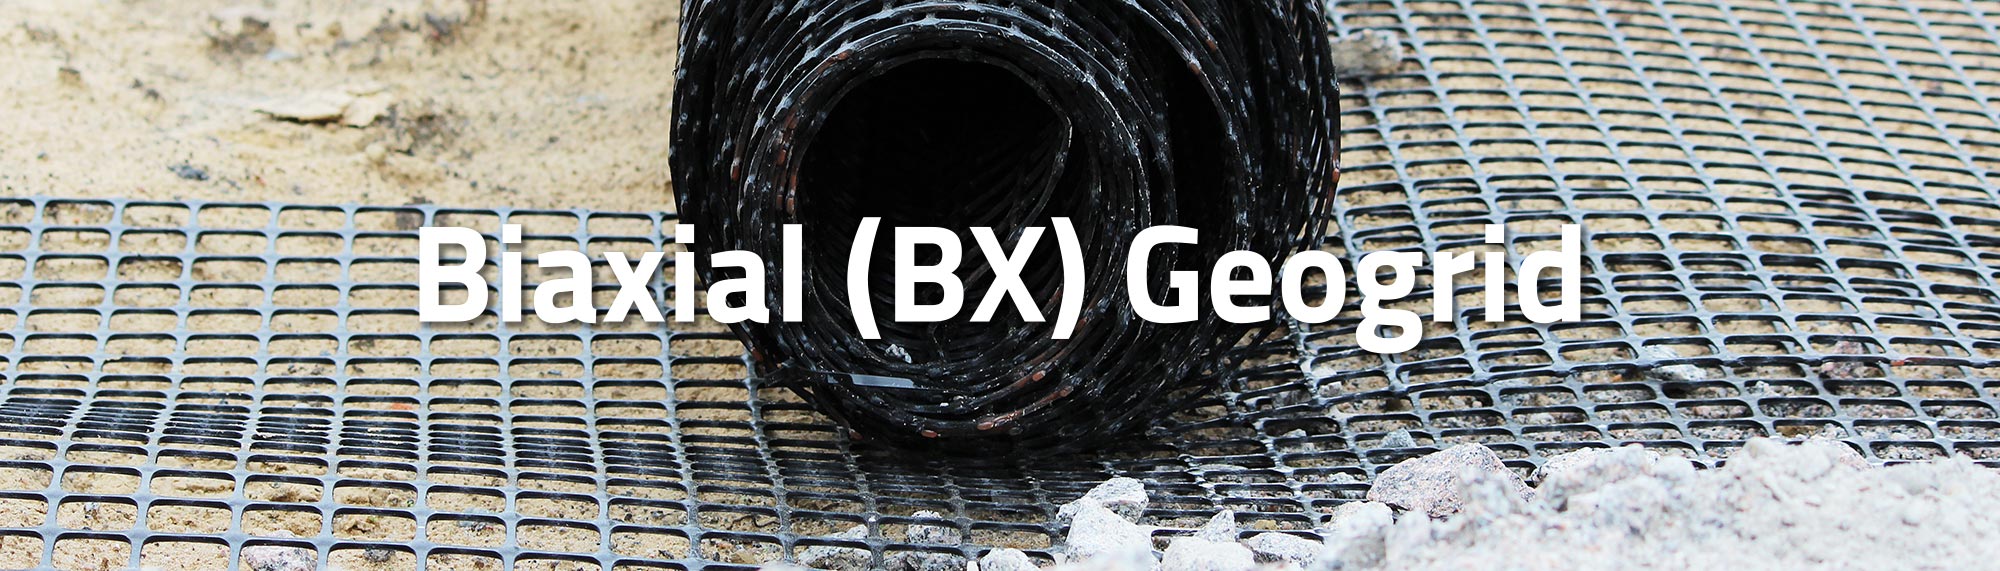 Biaxial BX Geogrid